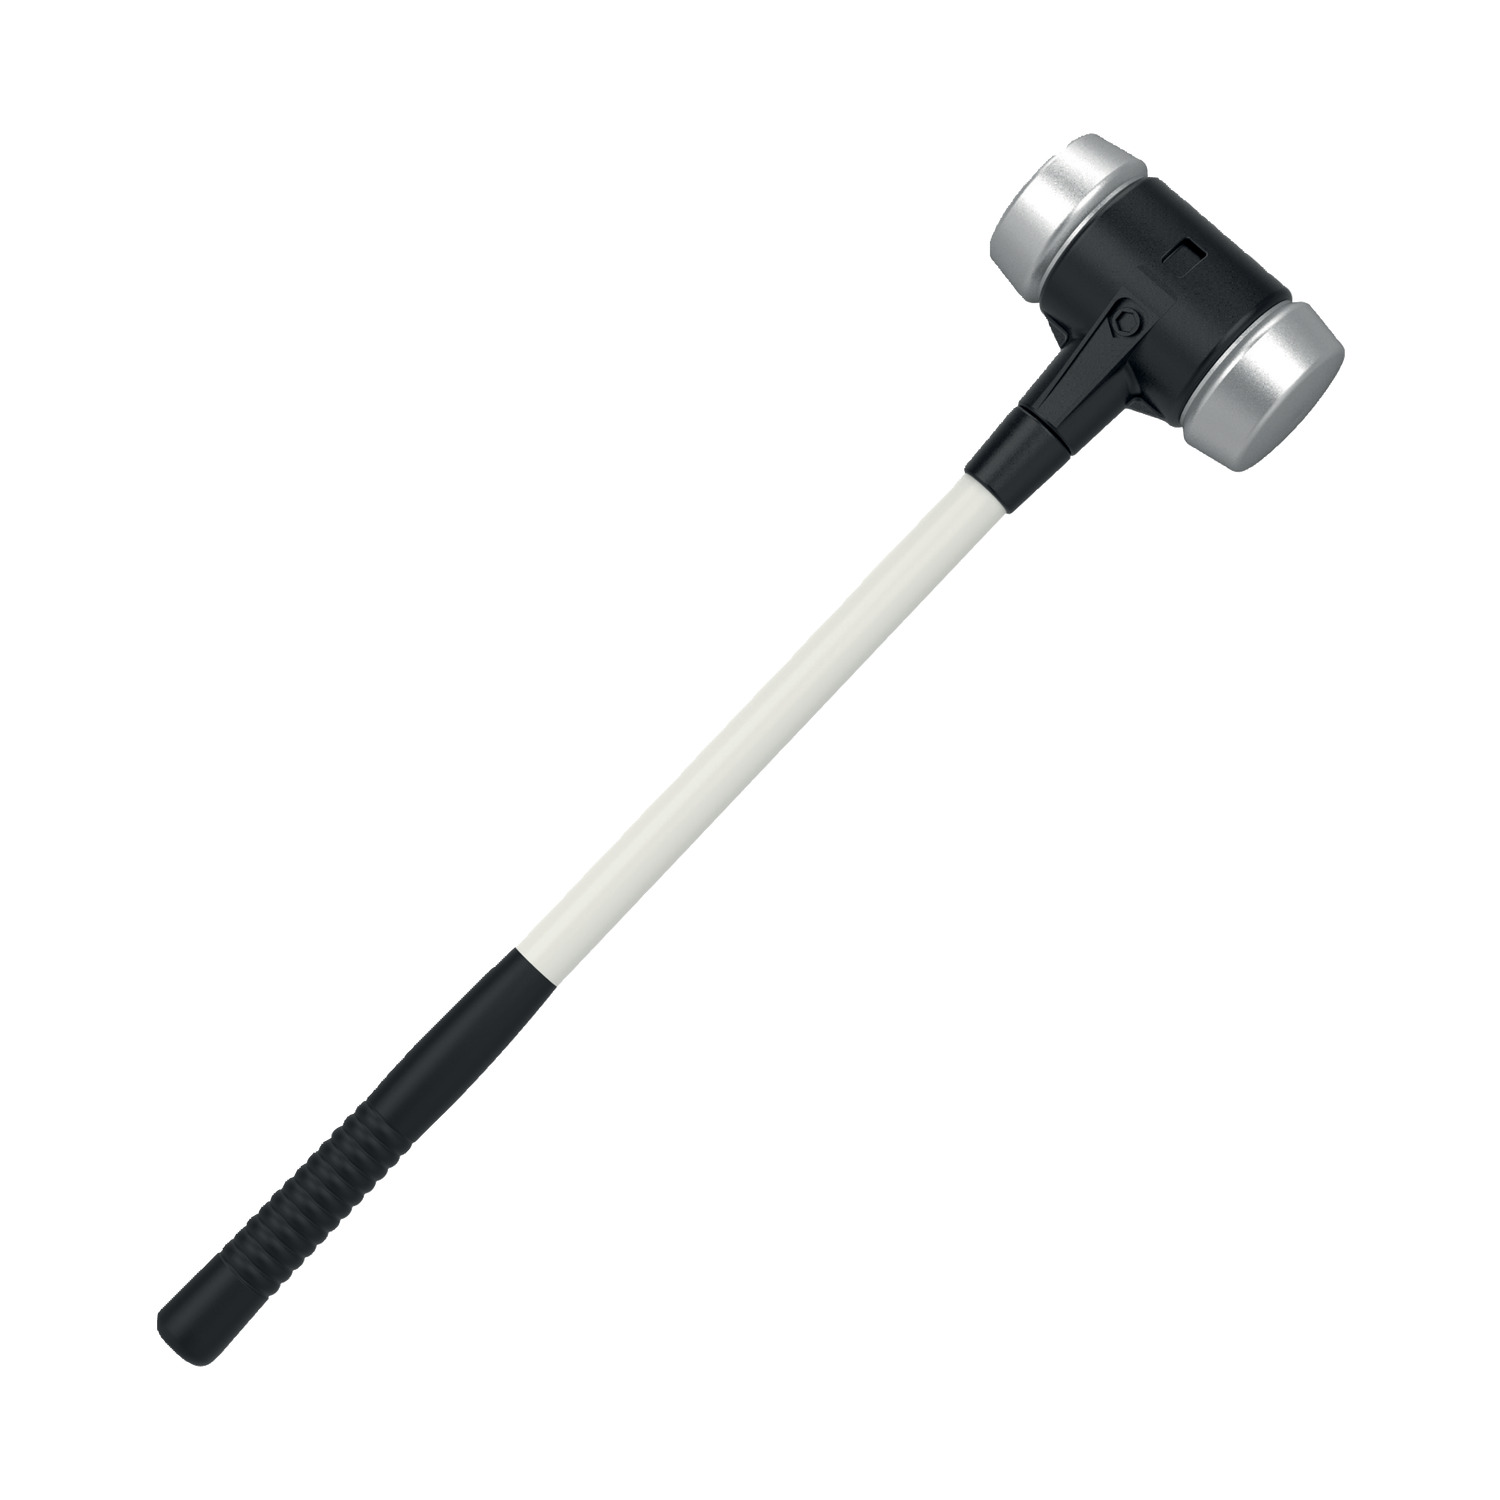 Product 98221, Simplex Sledge Hammer - Complete reinforced cast iron housing - fibreglass handle / 